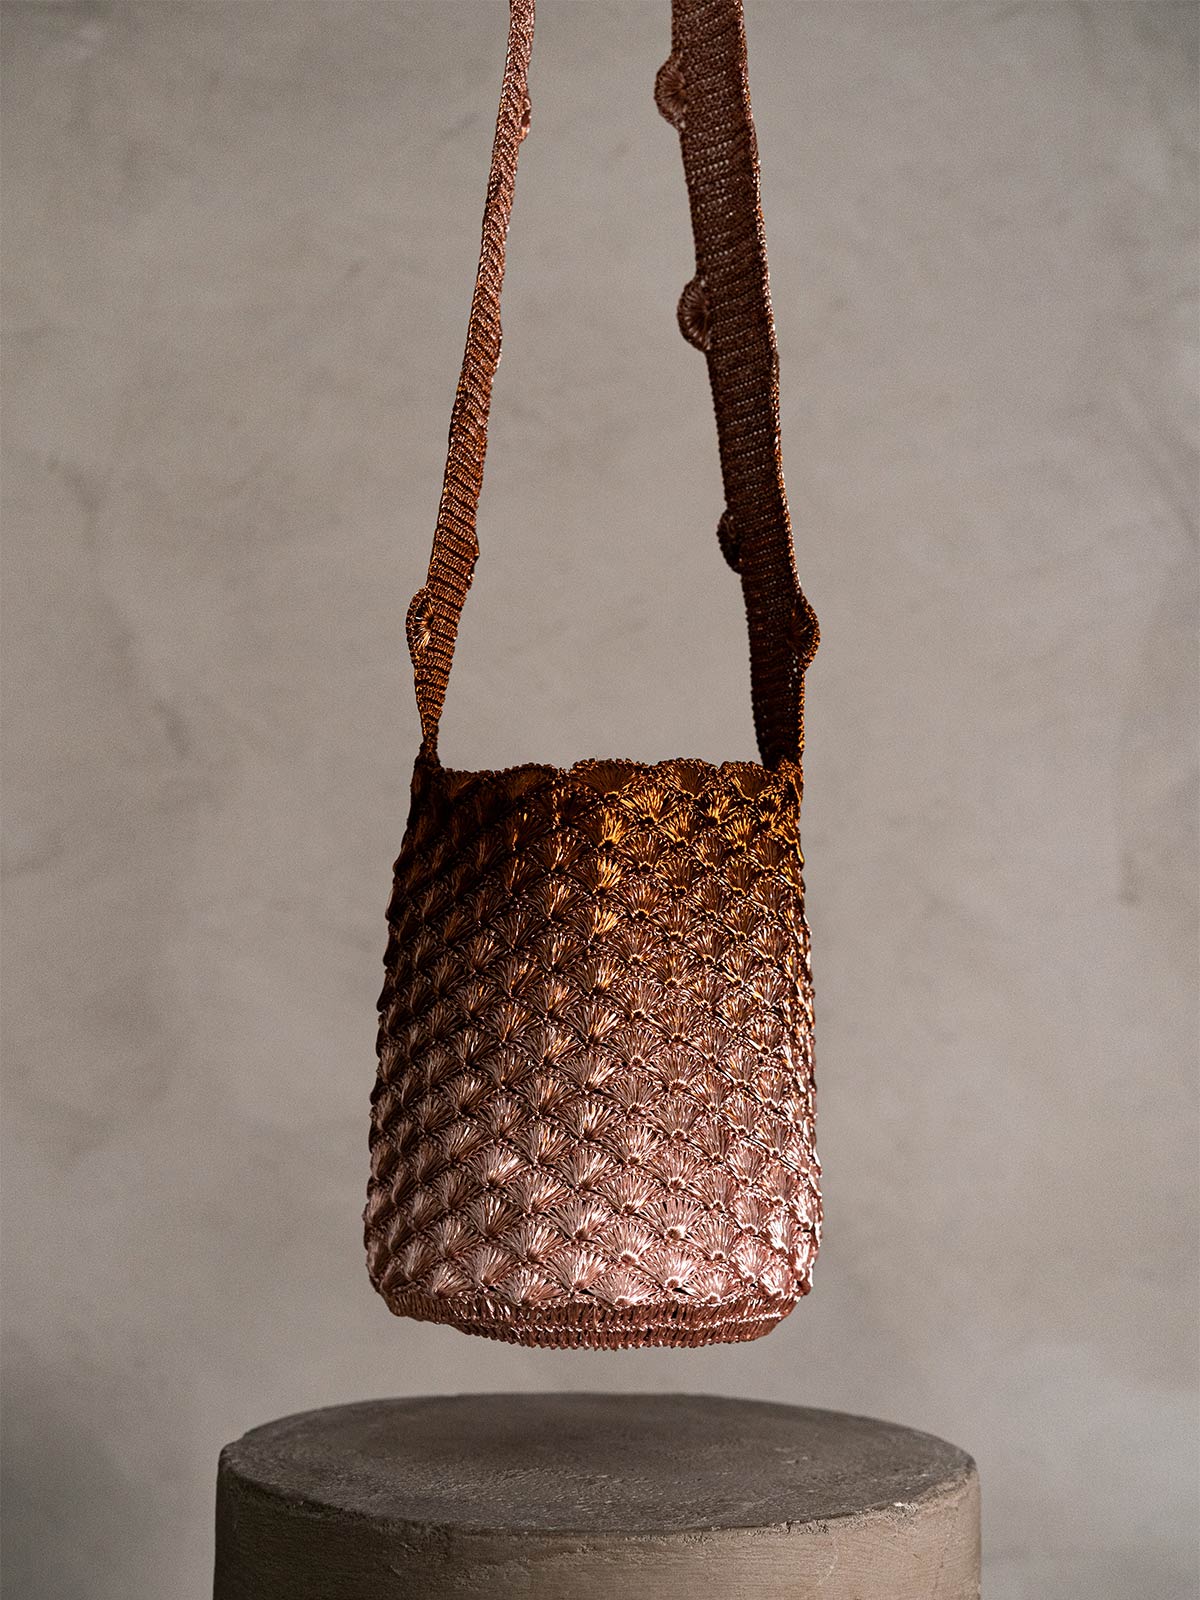 KAIA Seashell Handbag Long Strap | Silver Plated Copper and Gold Rose